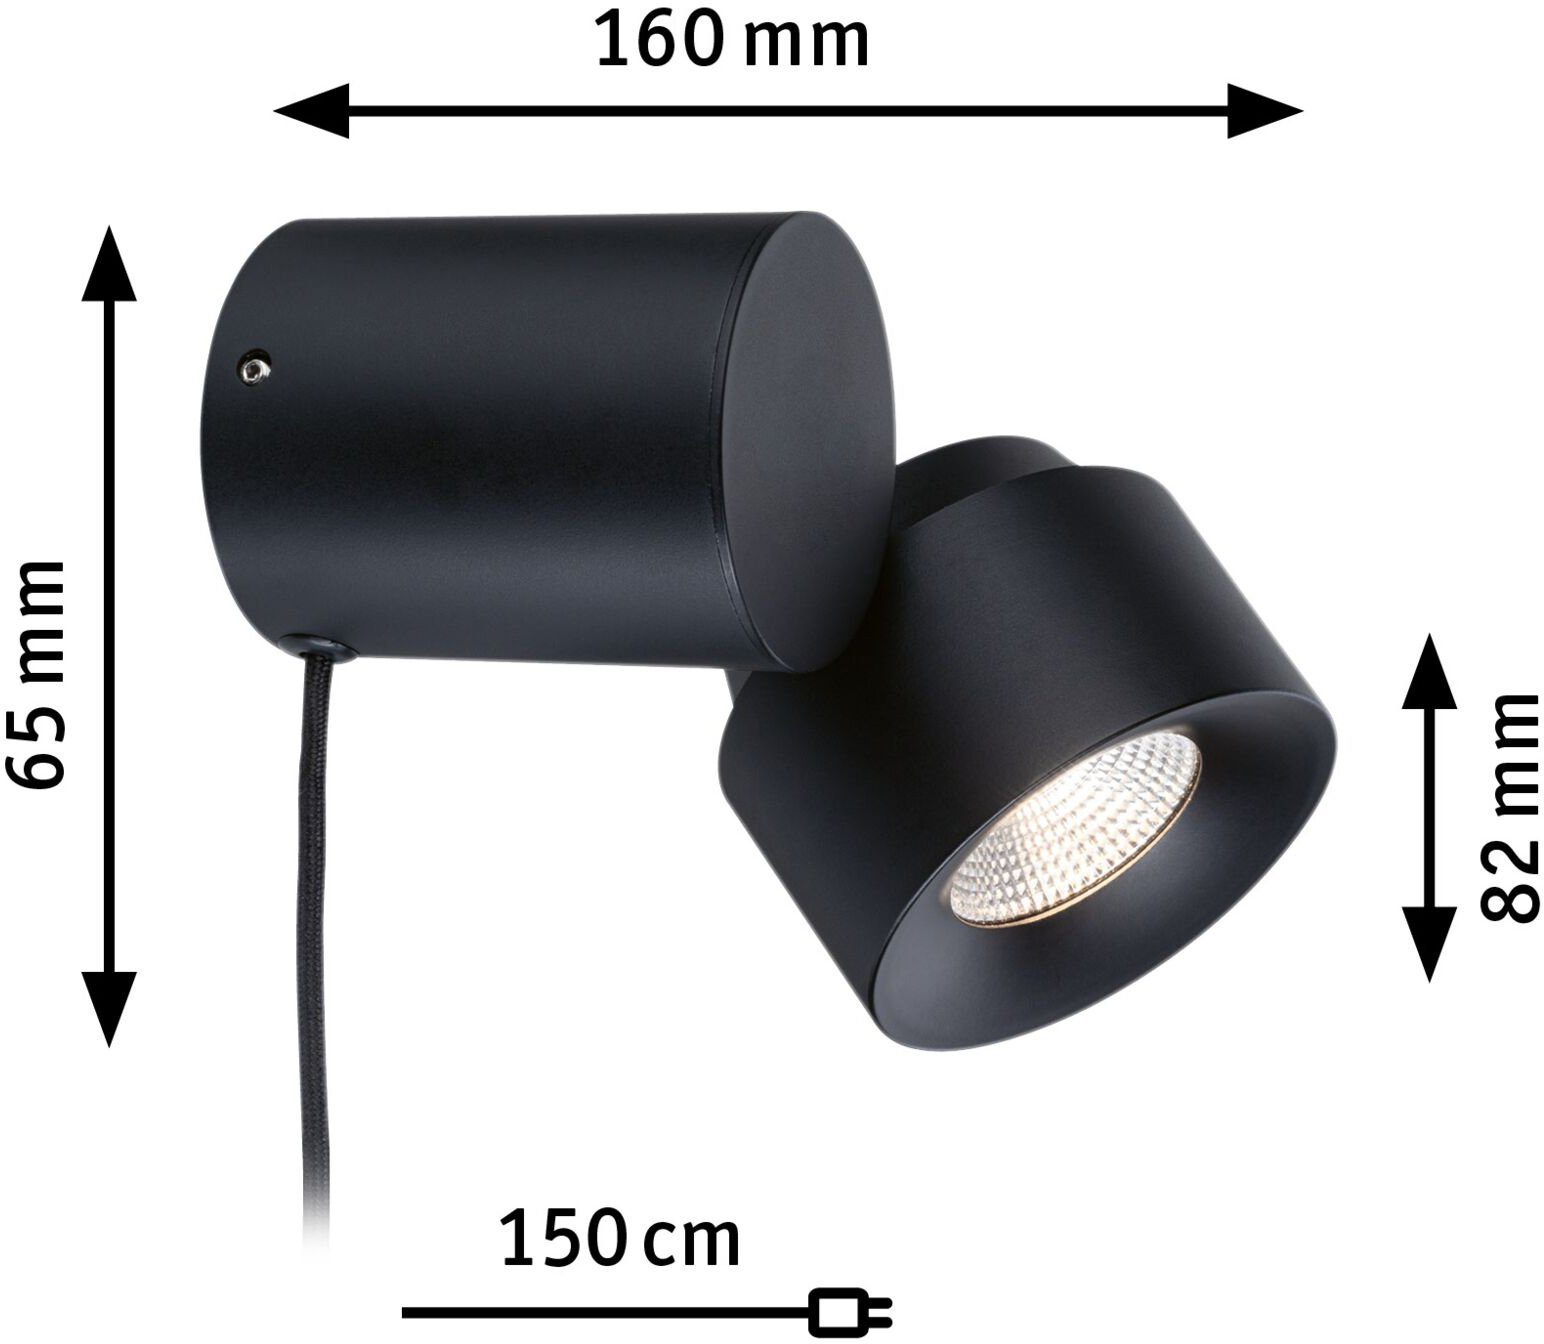 Warmweiß, Pane, fest Tischleuchte Paulmann Metall LED, dimmbar, Puric integriert, Schwarz/Grau, LED